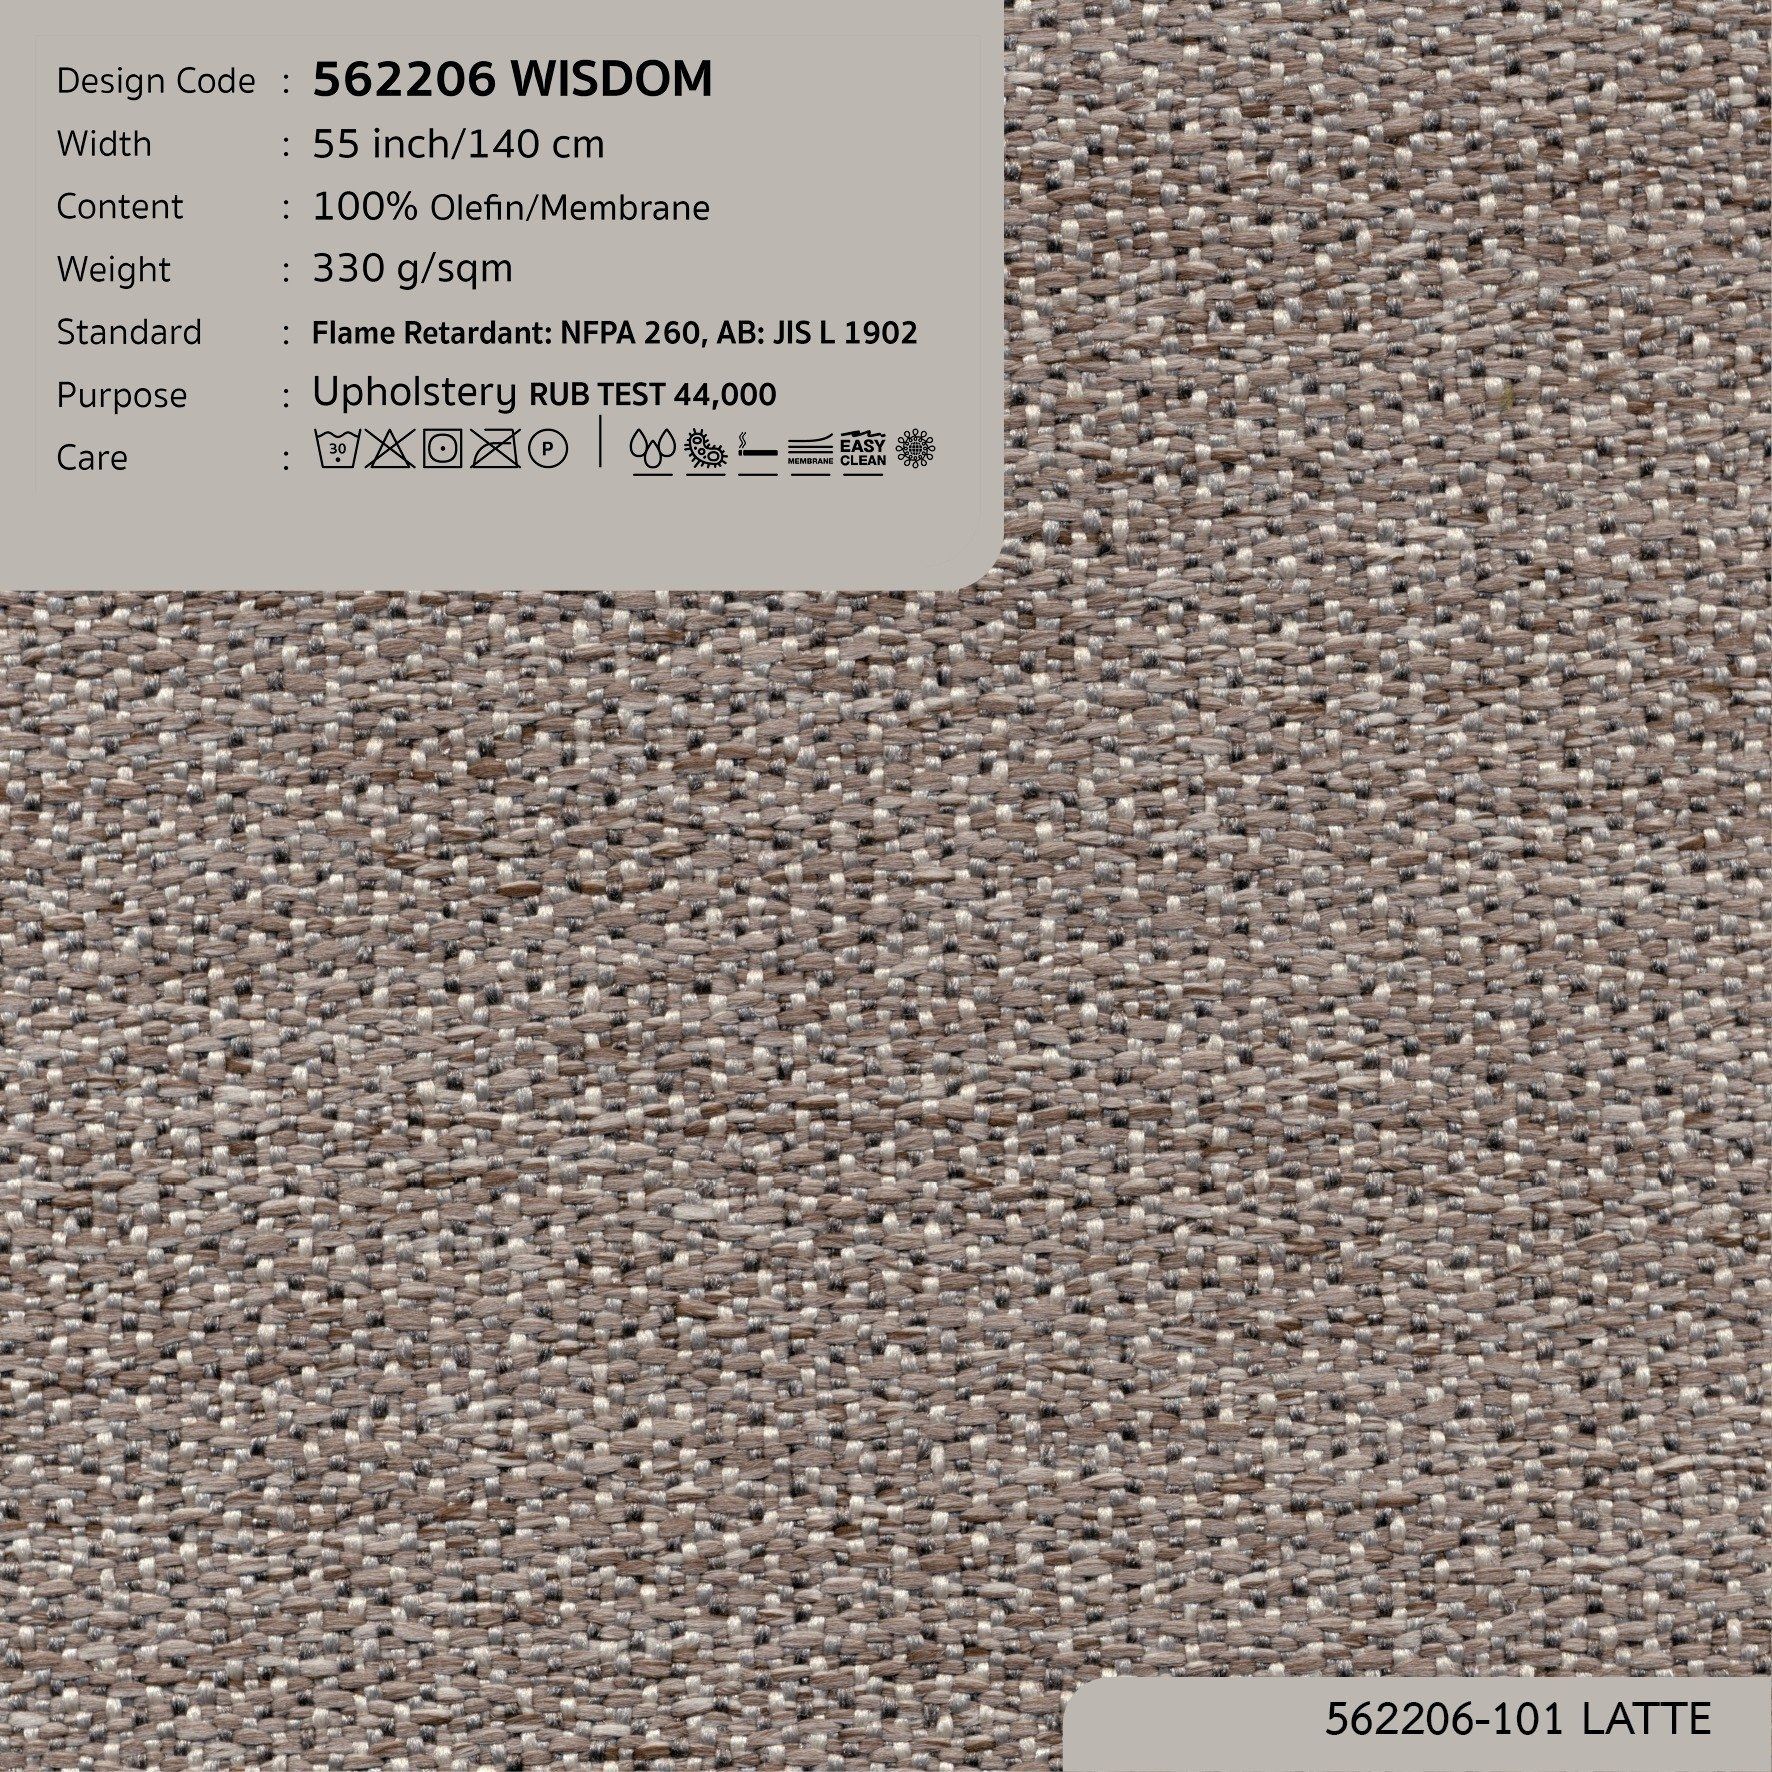  WISDOM 562206 có sẵn tại flagship store 